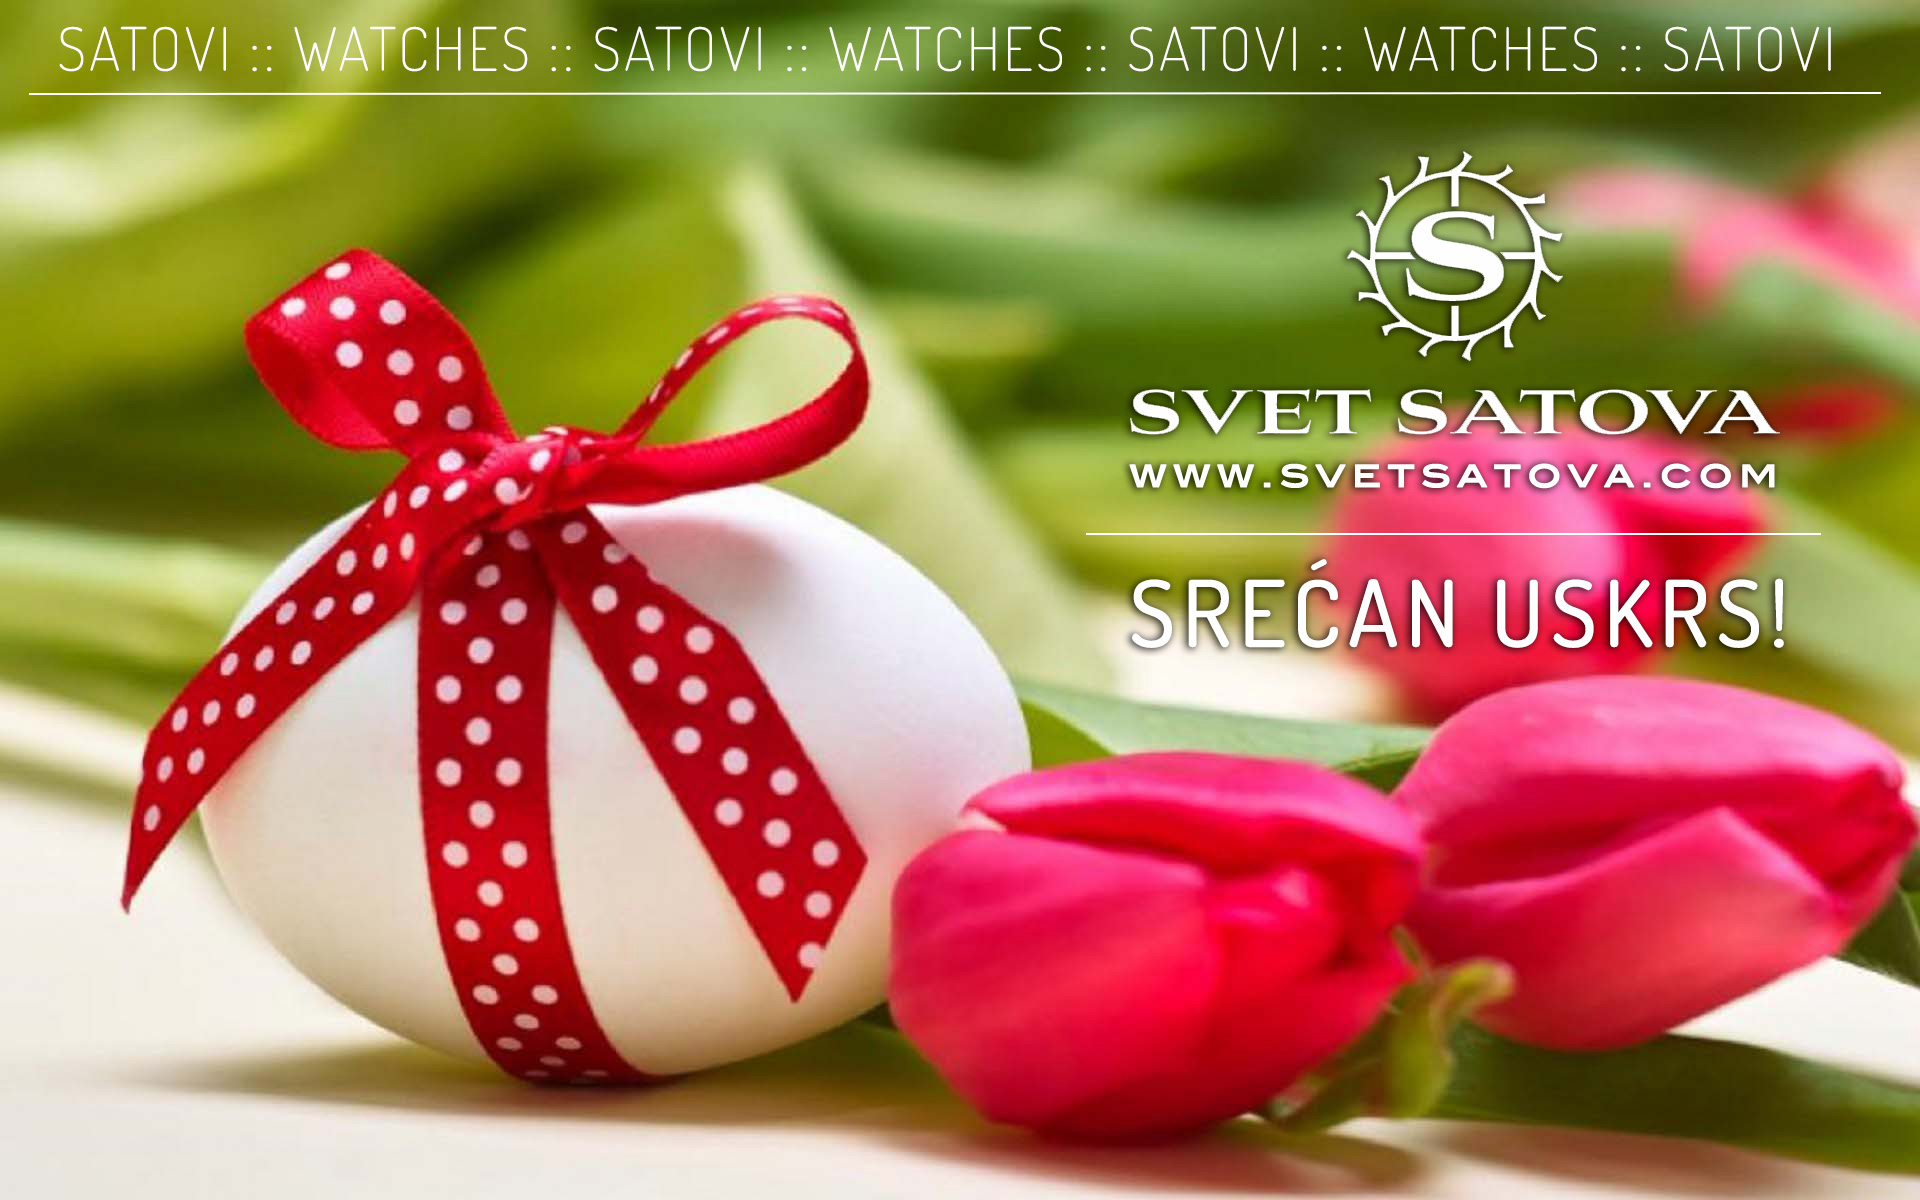 Naziv: Holidays-Easter-Egg-Svet-Satova-2015-1.jpg, pregleda: 277, veličina: 339,1 KB